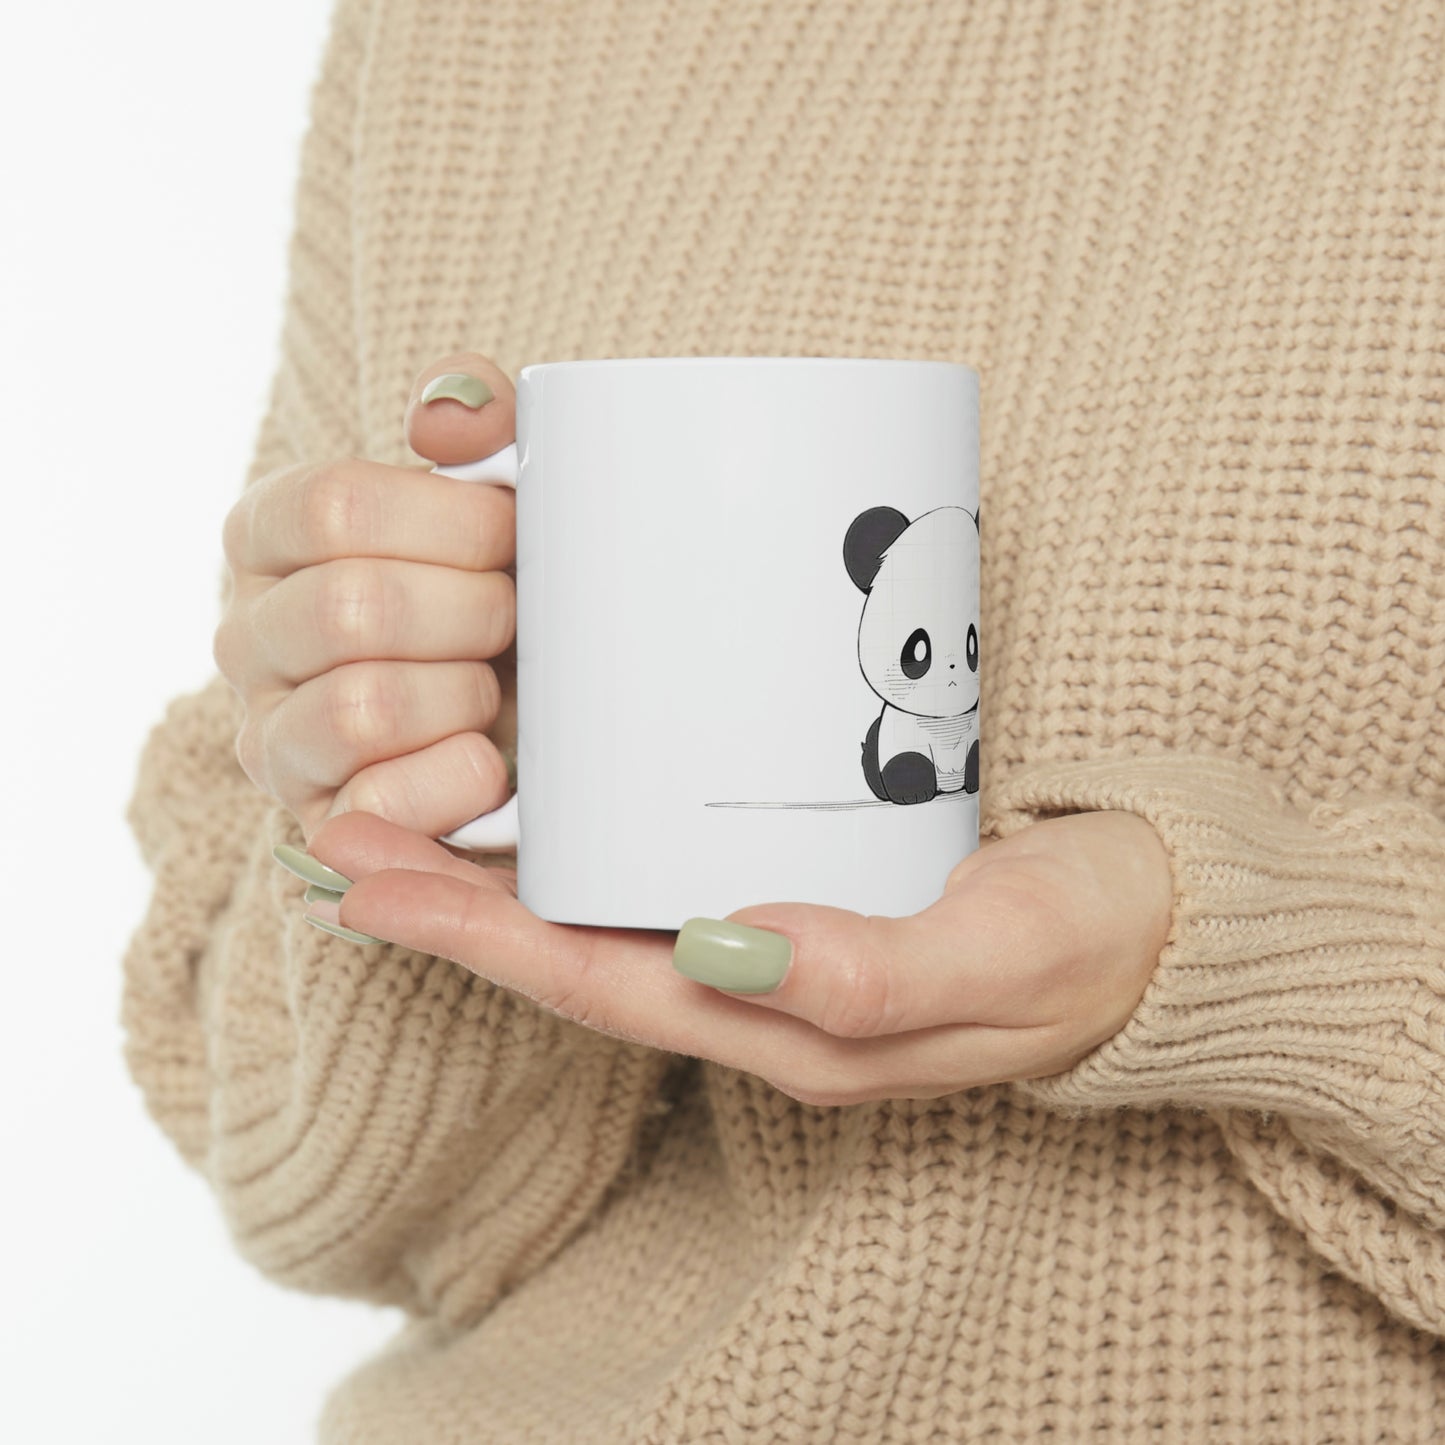 Cute Little Panda Ceramic Mug 11oz - Perfect for Coffee, Tea, and Hot Chocolate